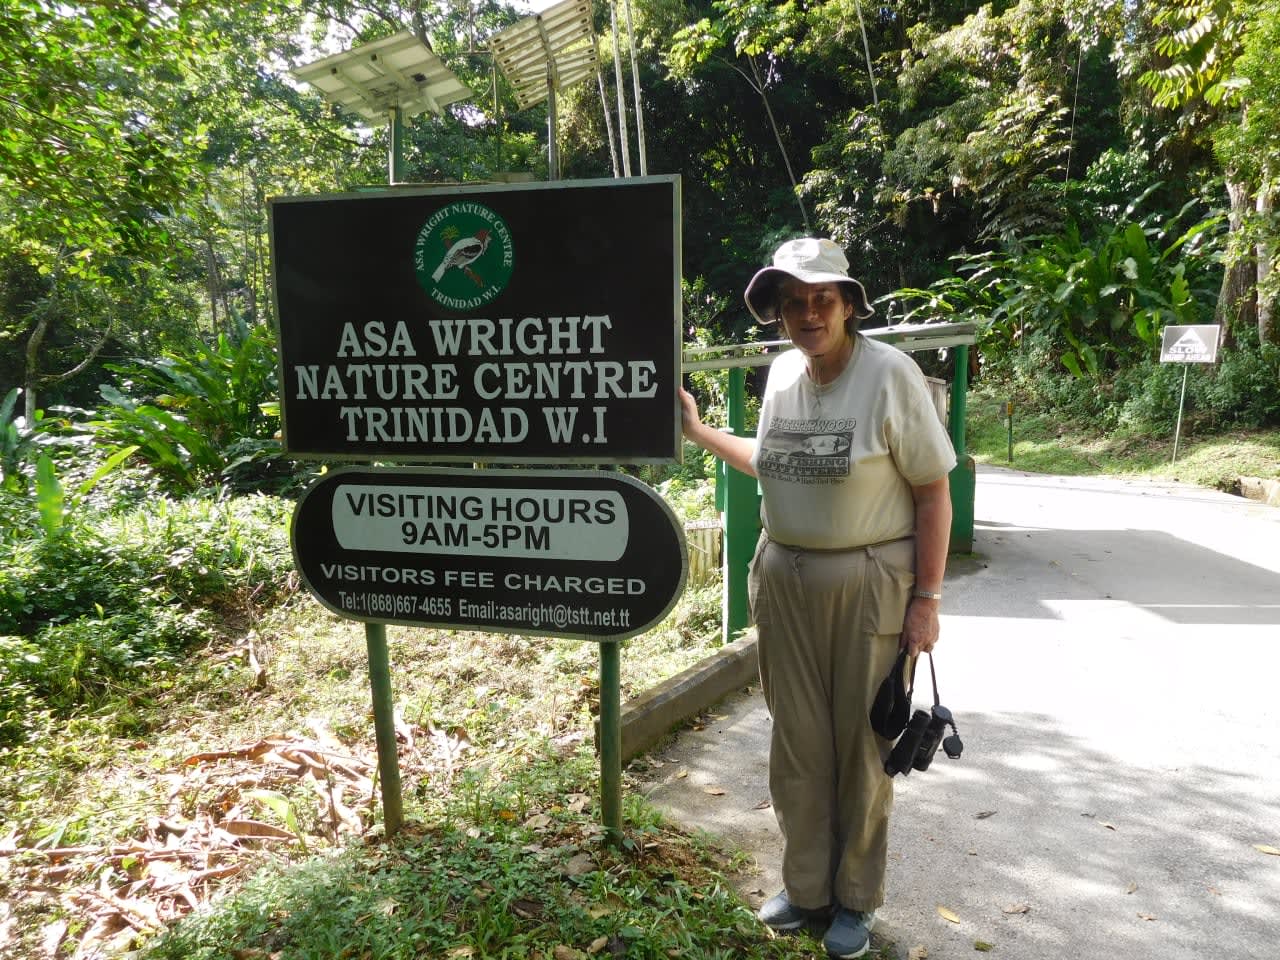 Rye Brook's Carol McMillan at Asa Wright Nature Center in the mountains of Trinidad.